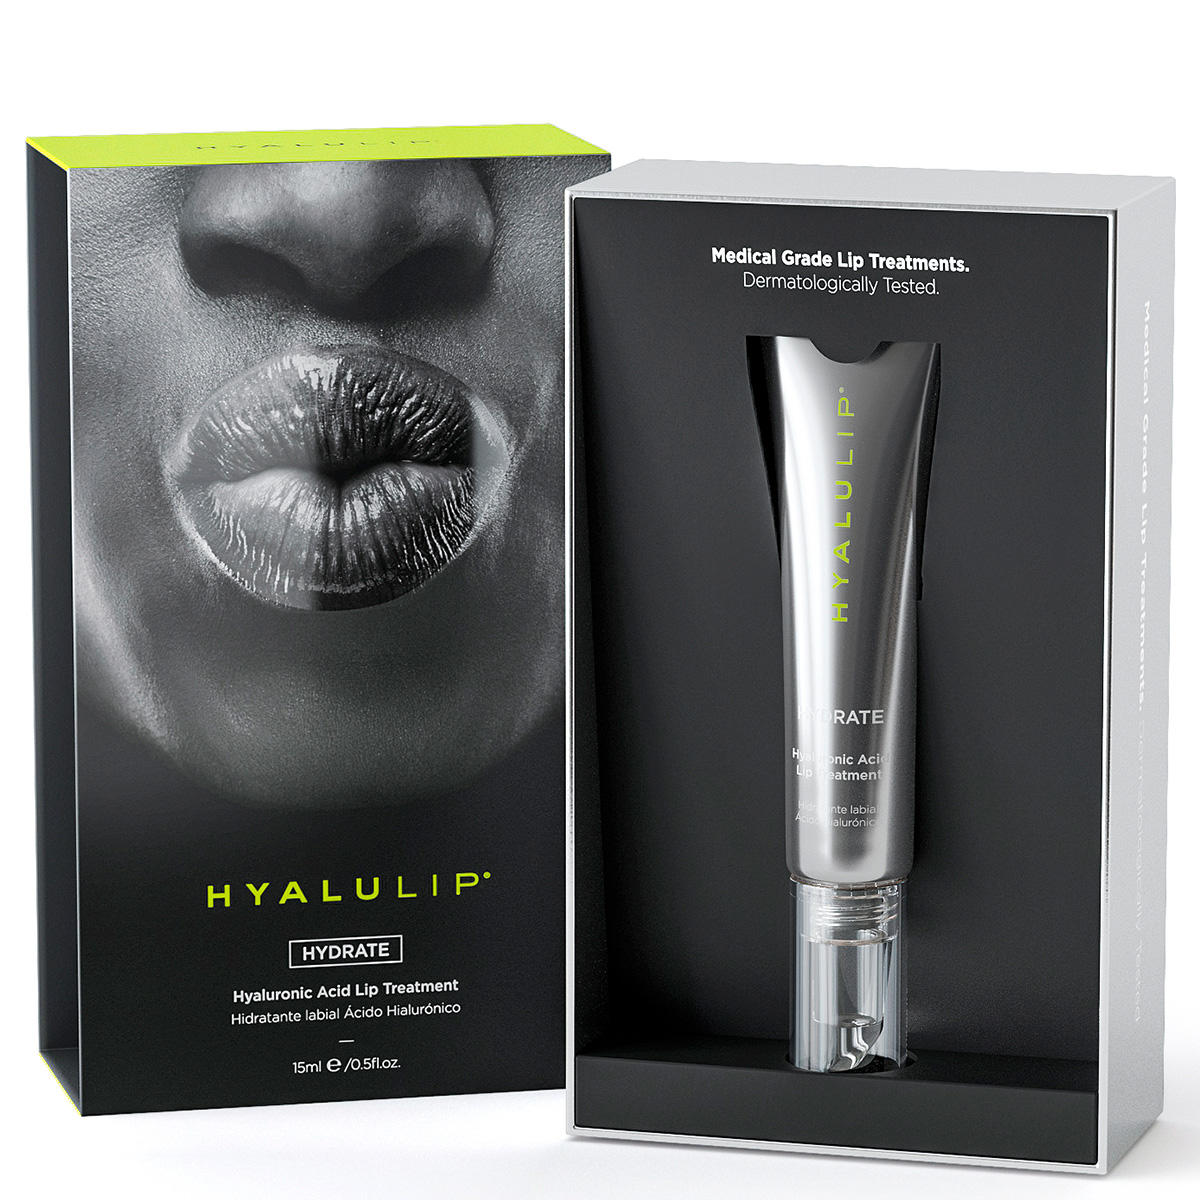 Hyalulip HYDRATE Hyaluronic Acid Lip Treatment 15 ml - 3